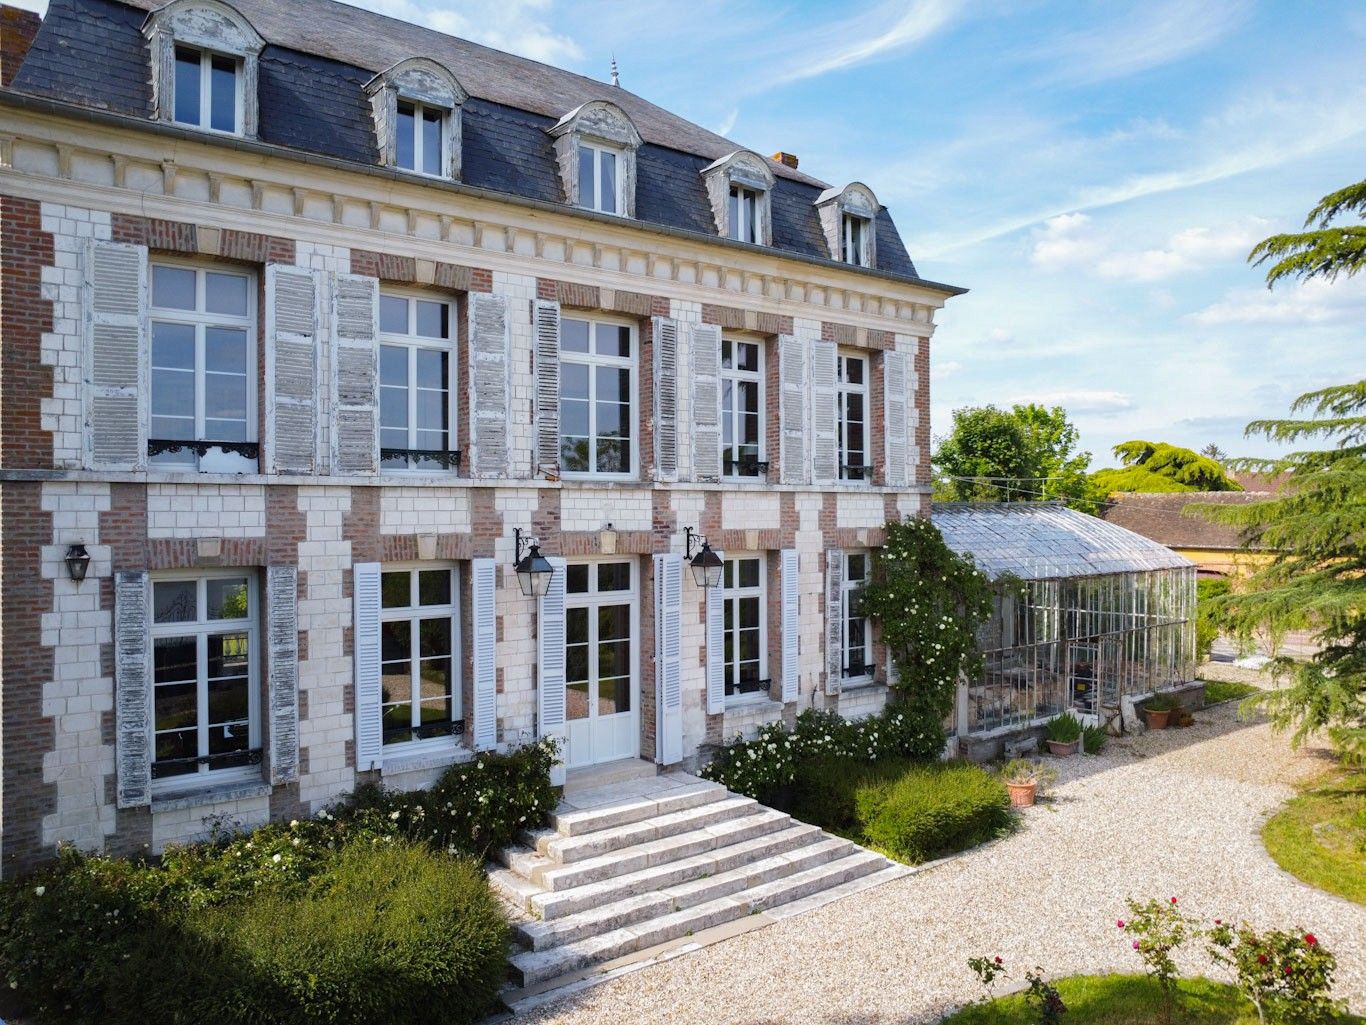 Photos Stately villa on the Seine - 100 km east of Paris